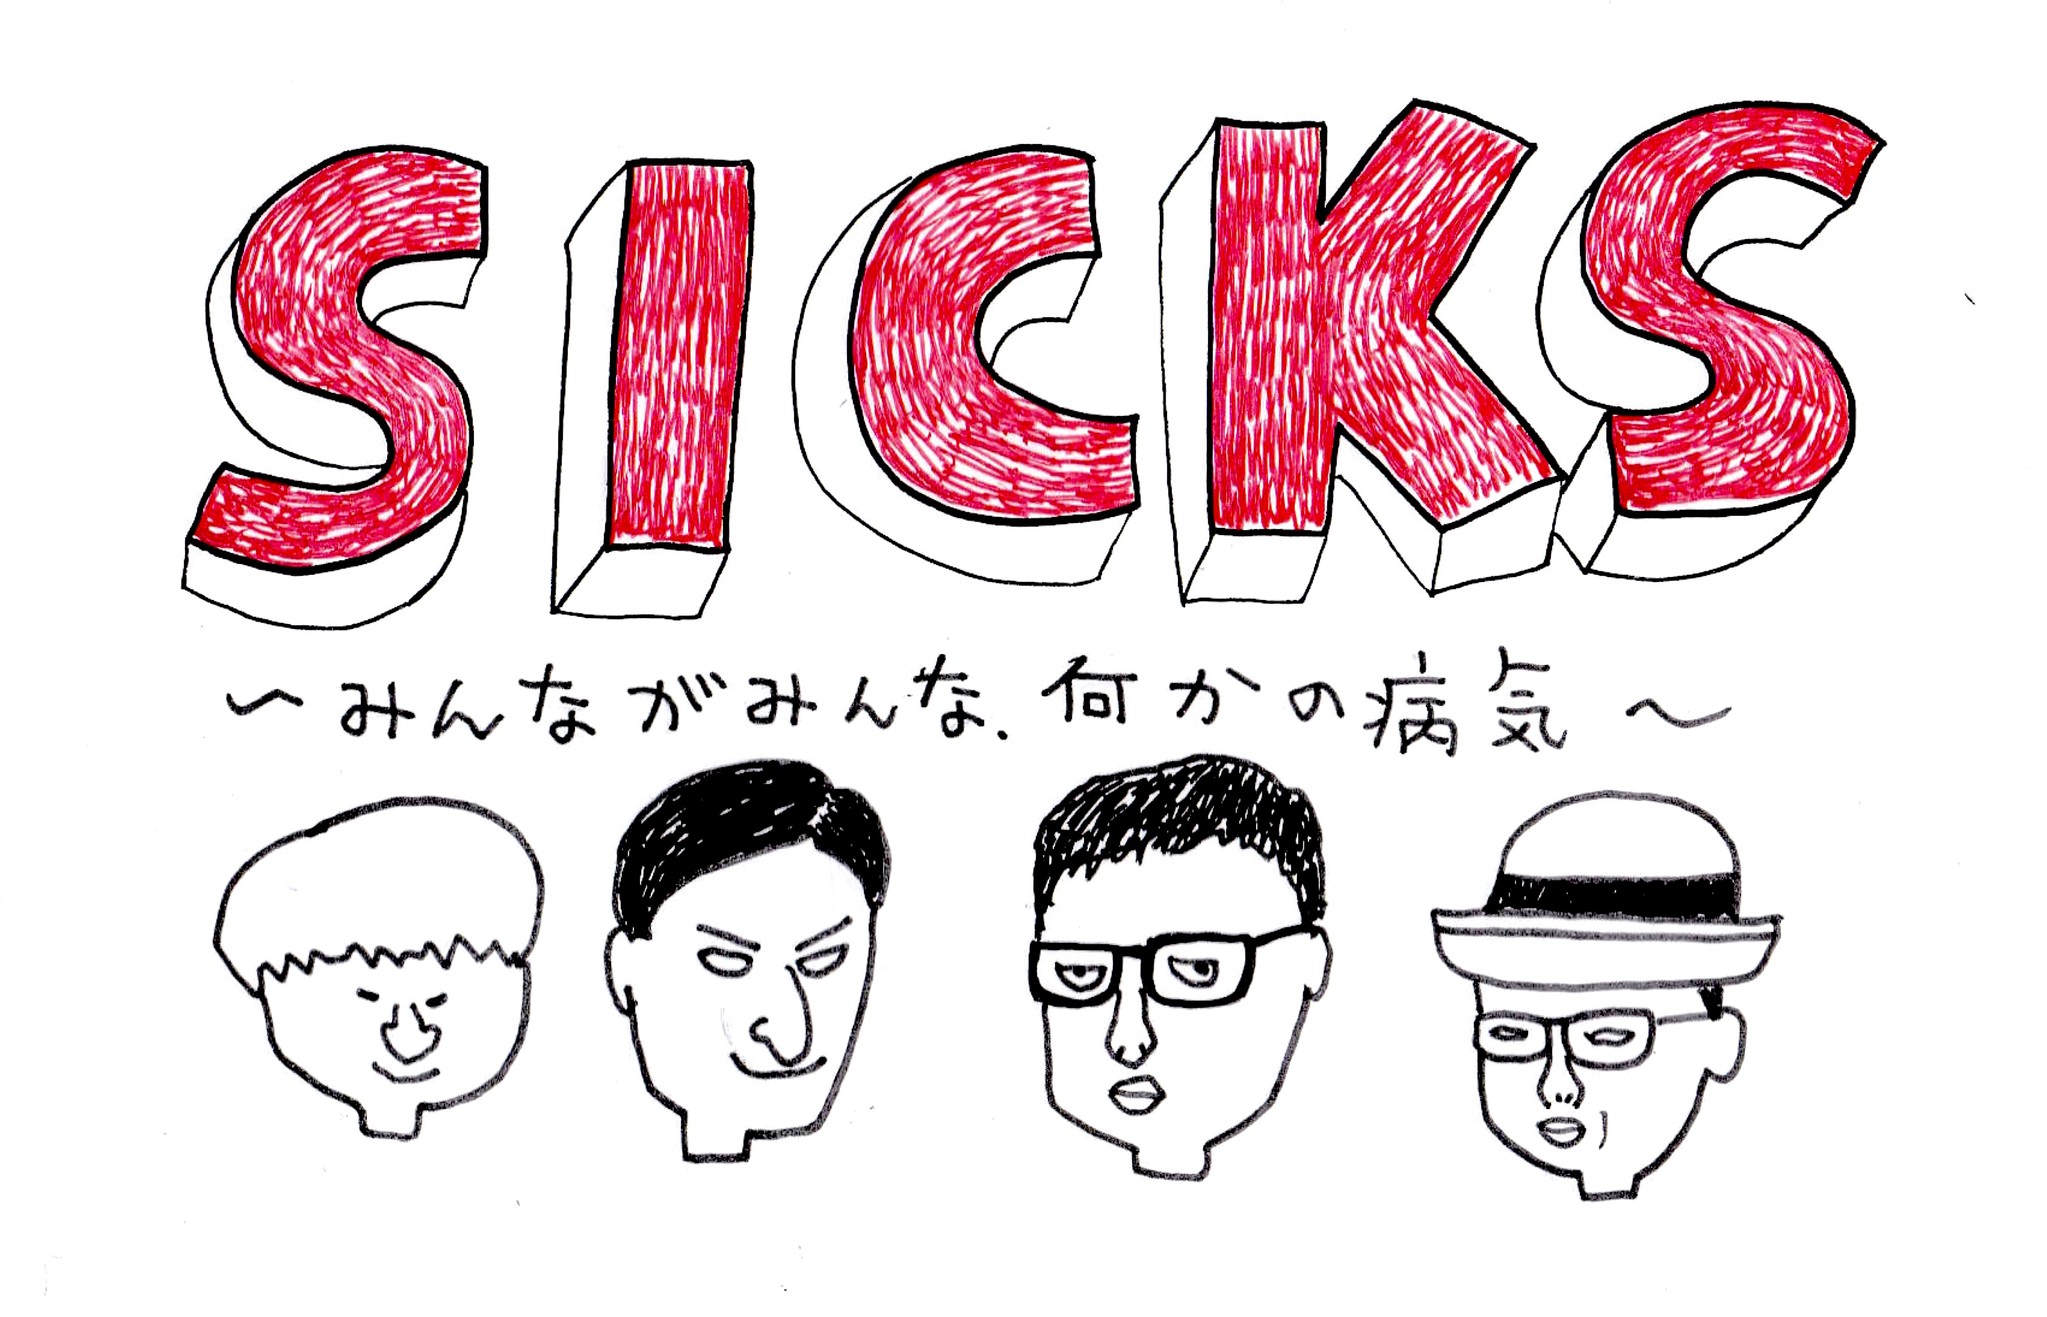 Sicks みんながみんな 何かの病気 ブルーレイ Dvd発売記念 おぎやはぎトークイベント３月６日 日 開催決定 テレビ東京グループのプレスリリース